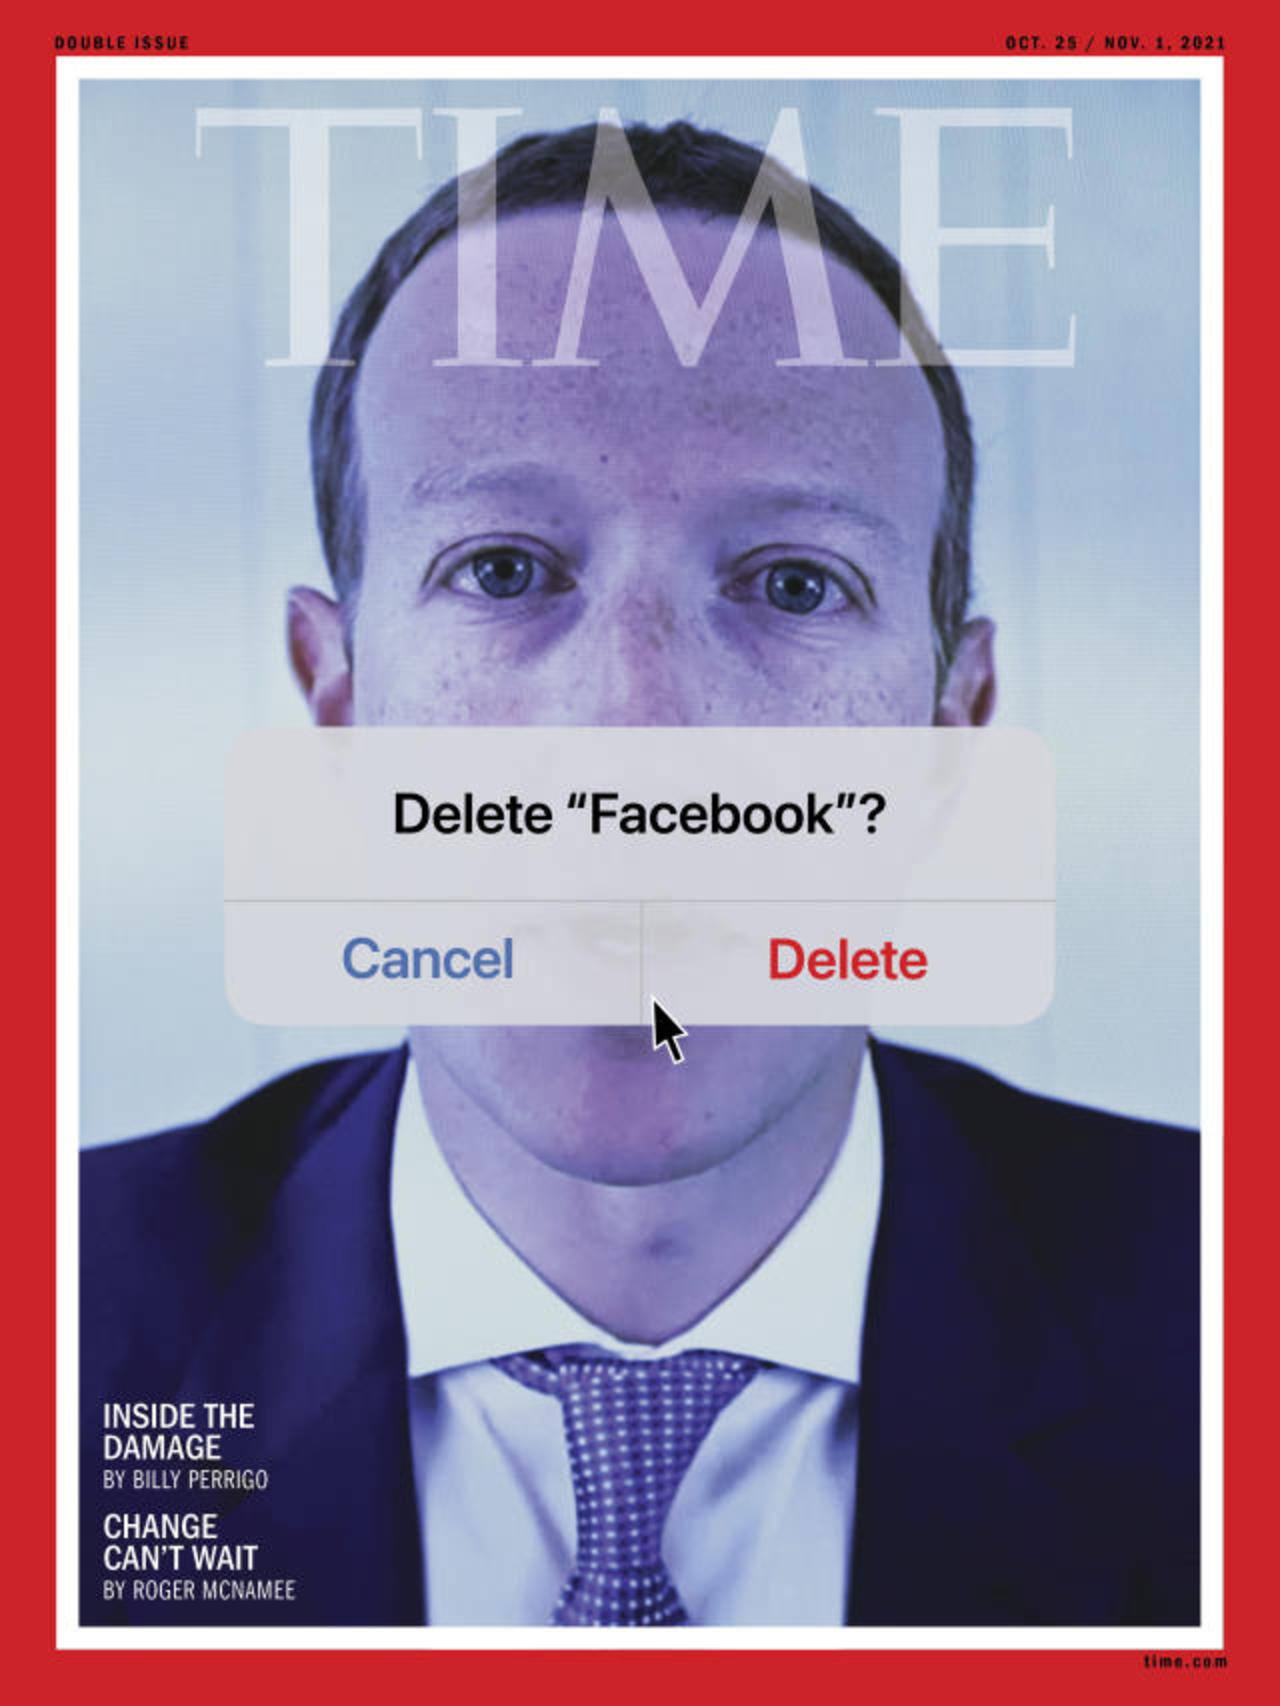 La portada de la revista Time levanta polémica por Facebook